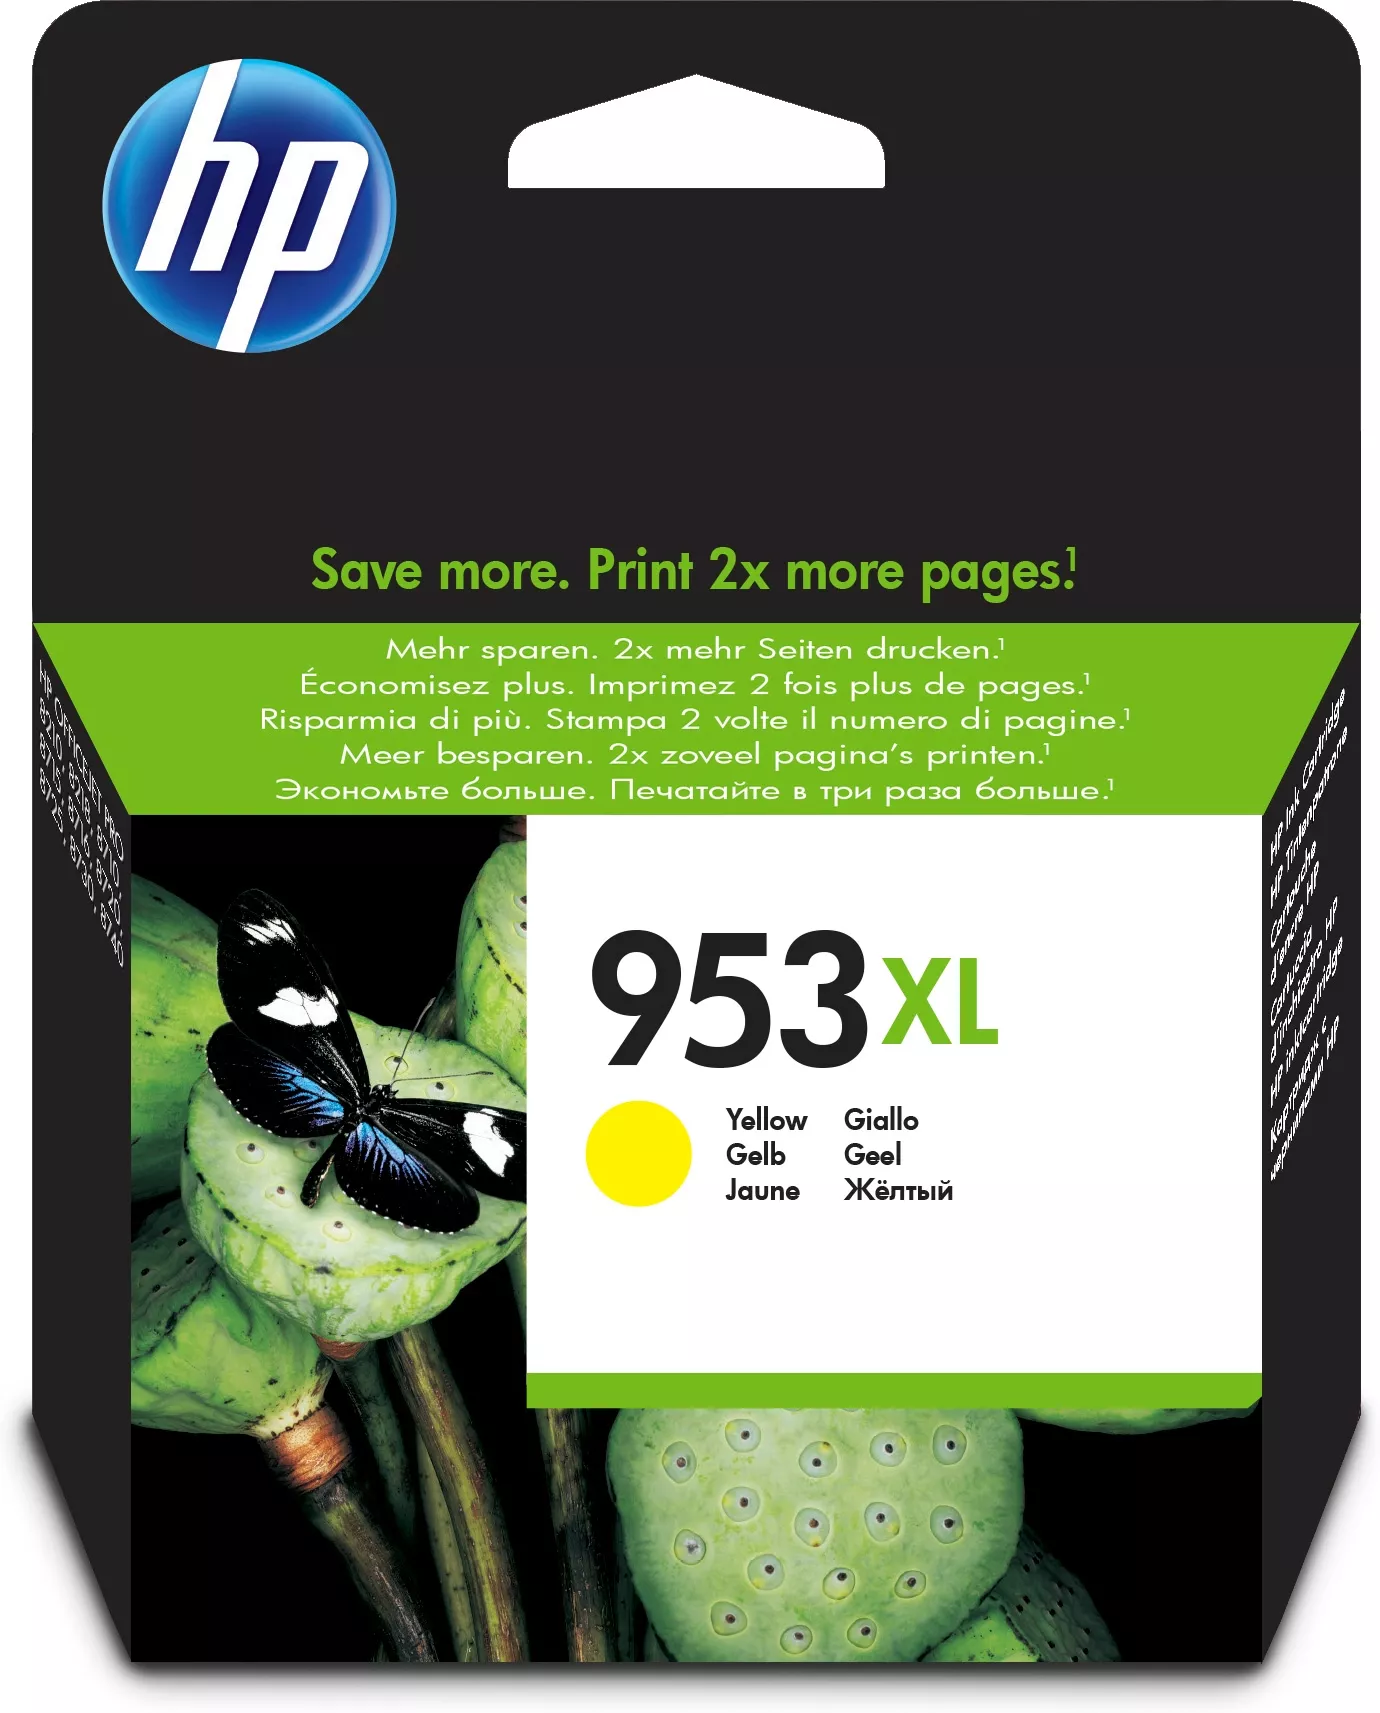 Achat HP 953XL original High Yield Ink cartridge F6U18AE 301 au meilleur prix